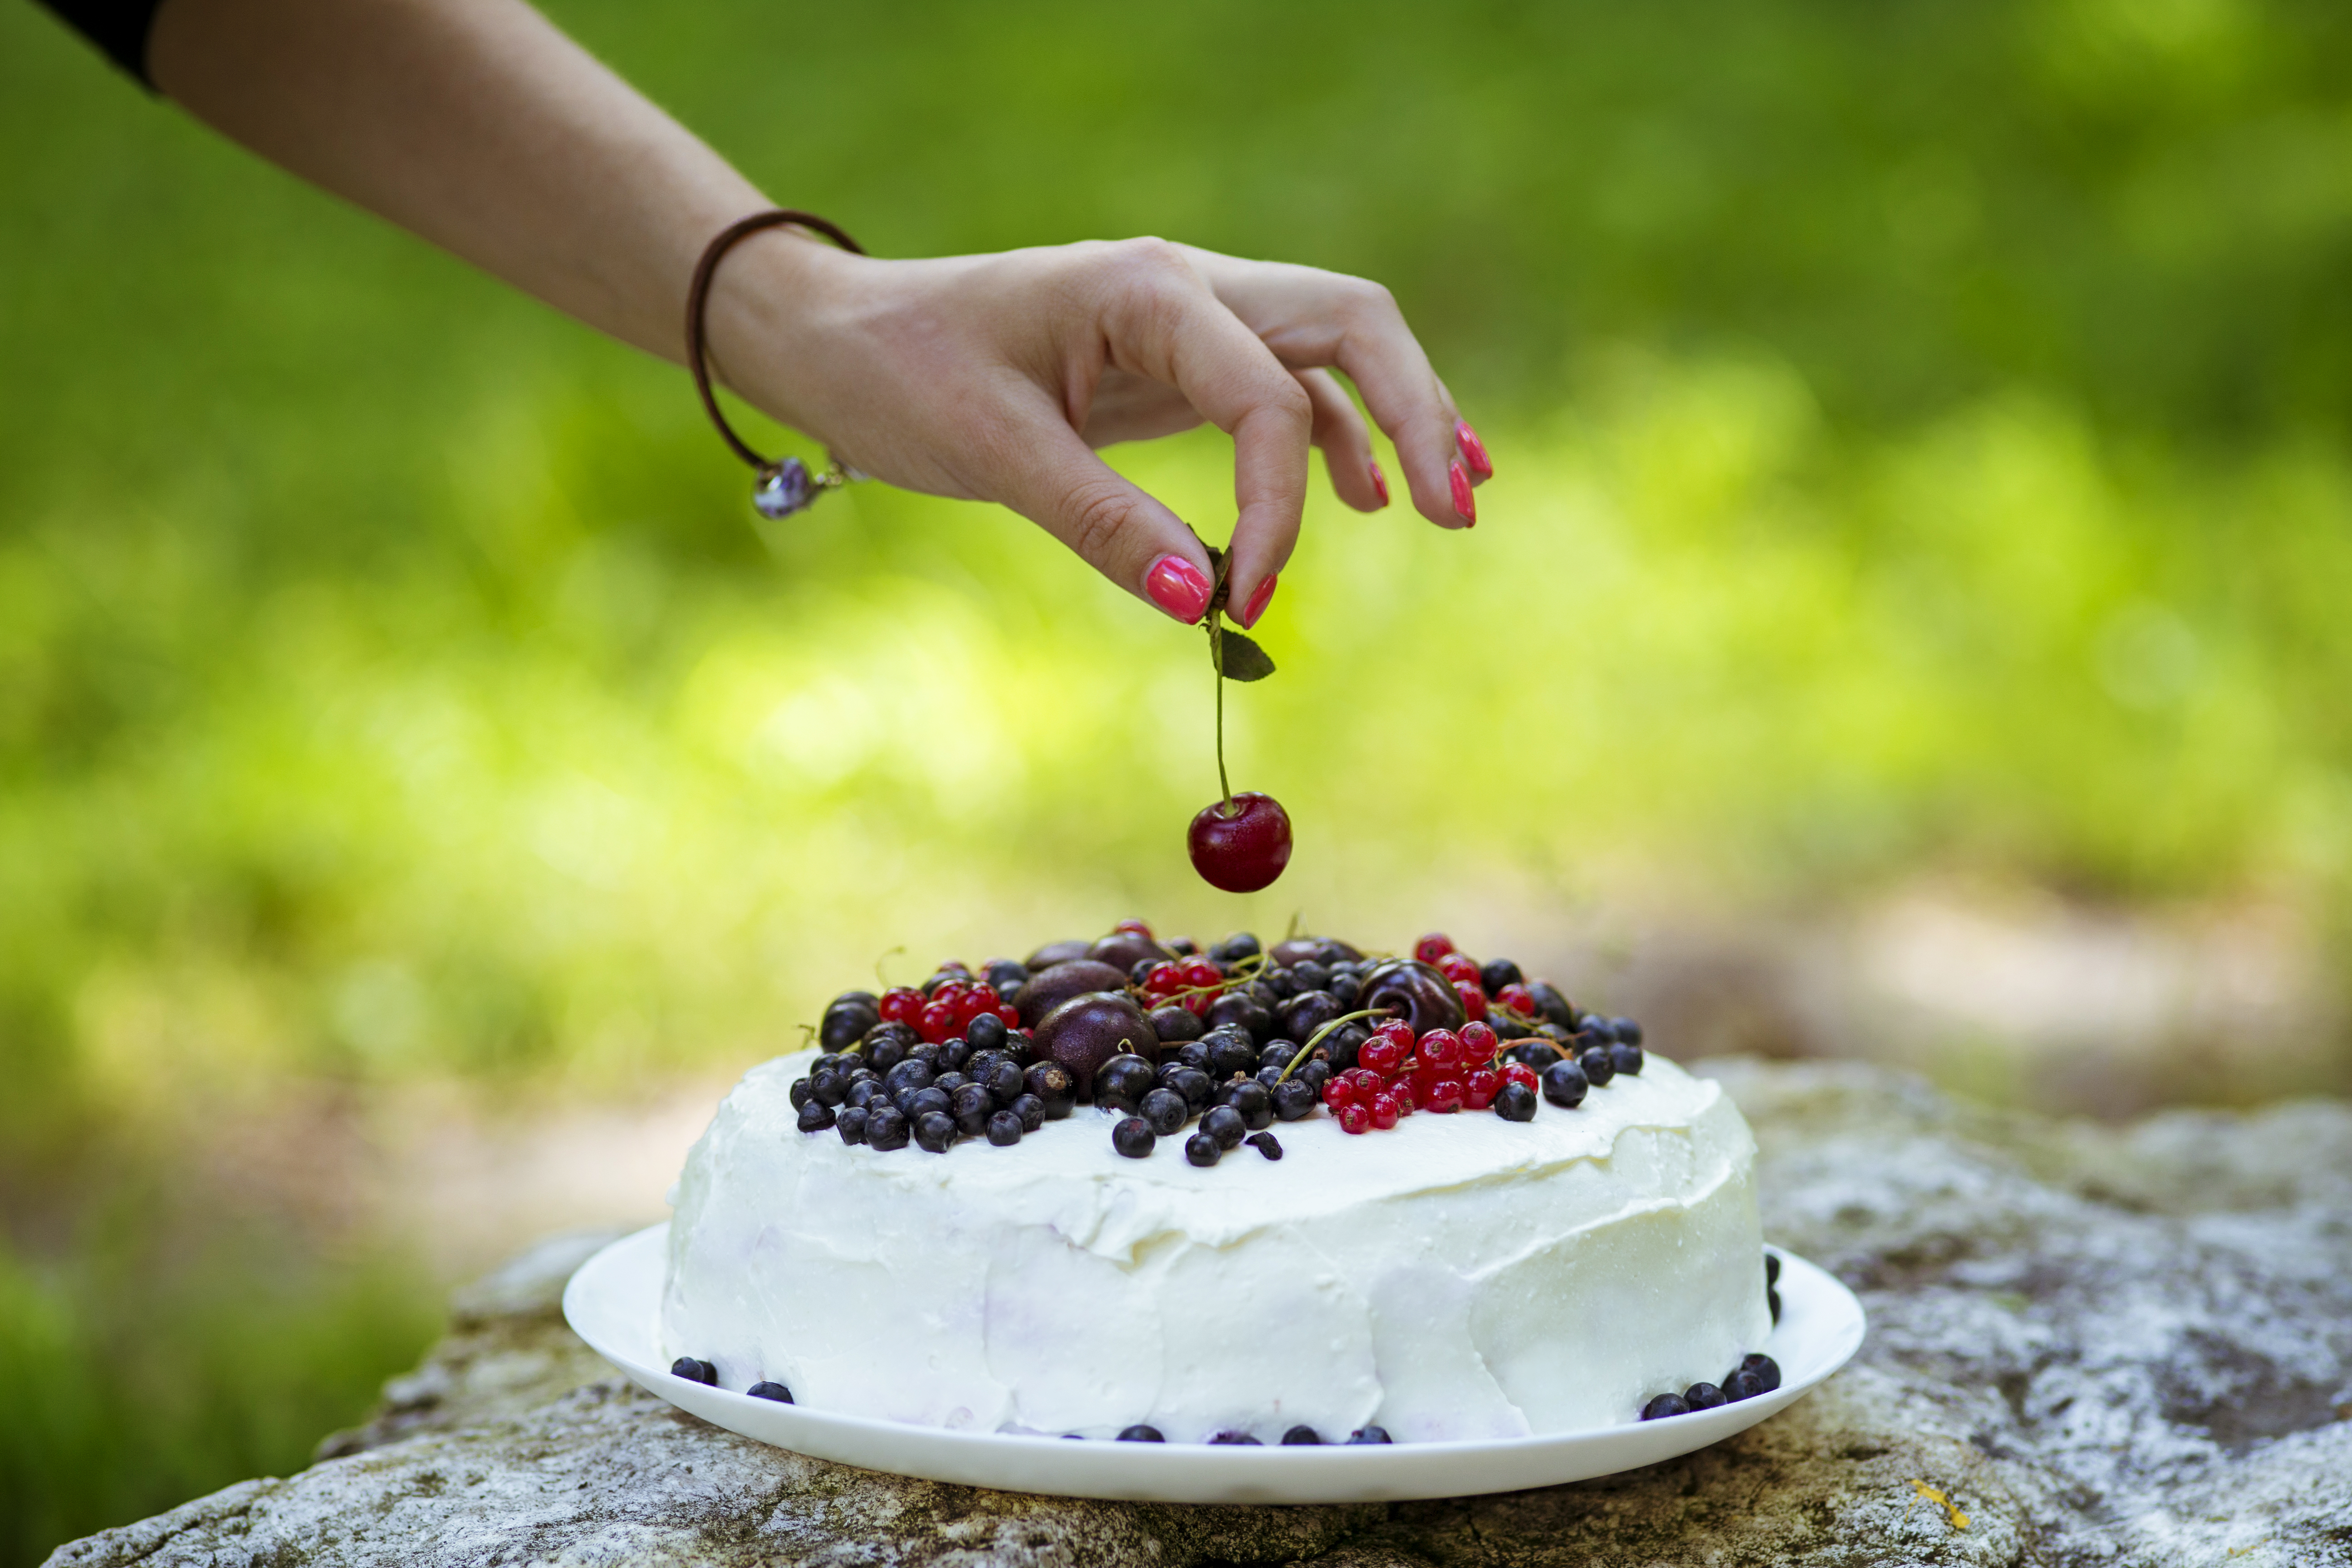 Putting cherry on the fresh berry cake photo